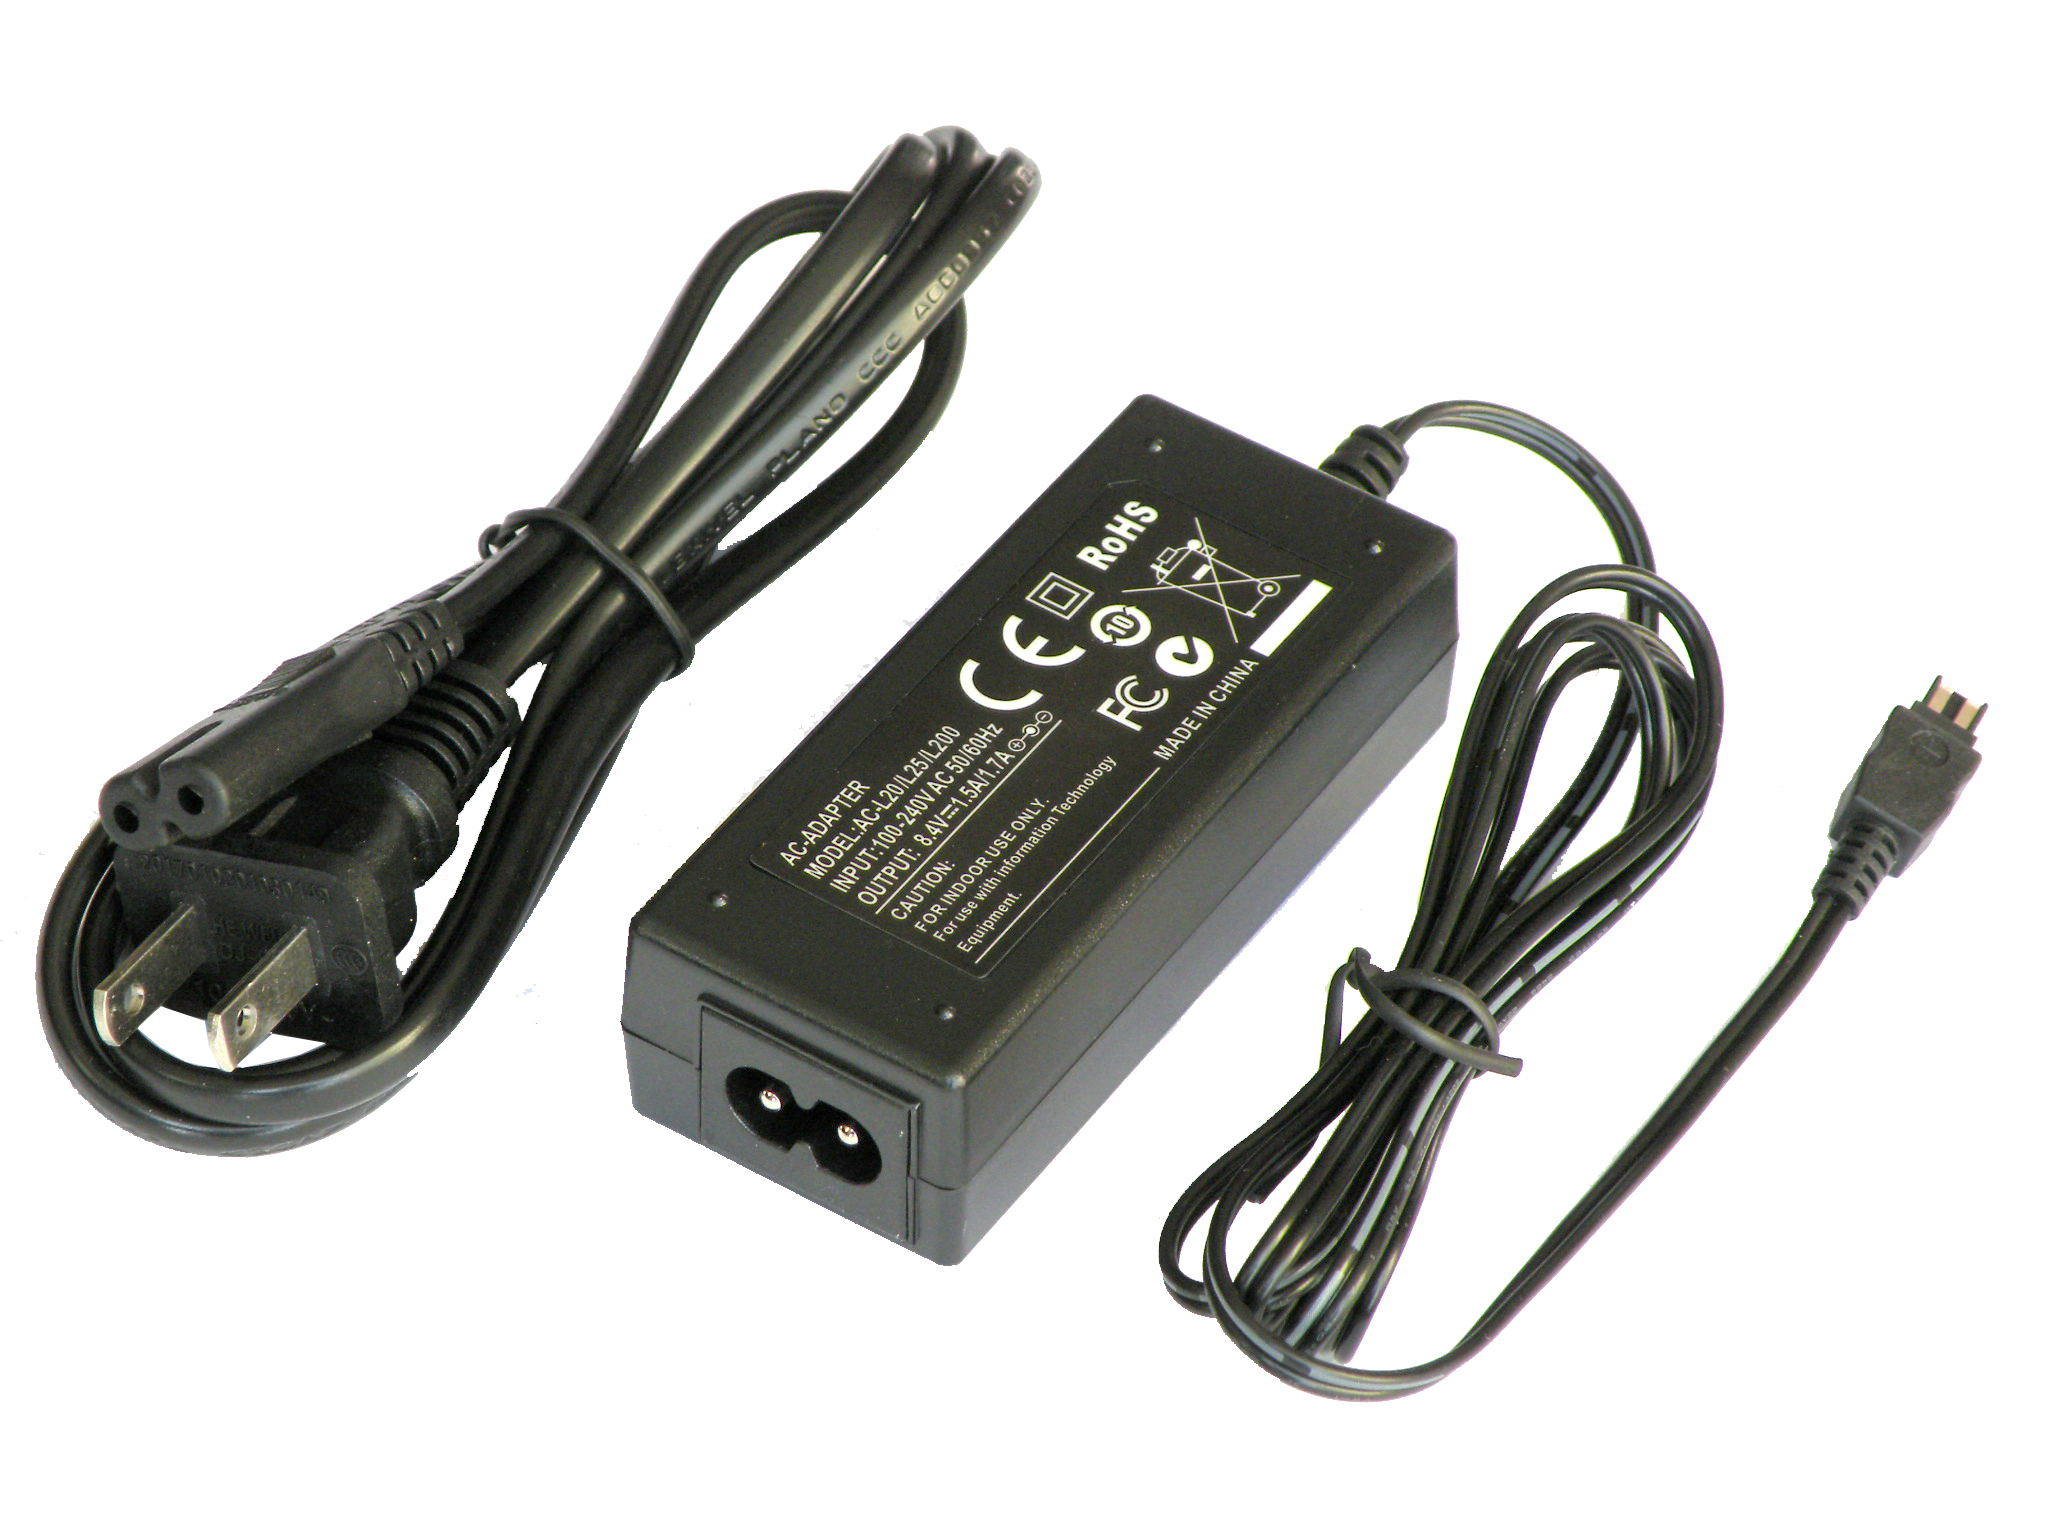 iTEKIRO AC Adapter for Sony DCR-SX45/L, DCR-SX45/S, DCR-SX53, DCR-SX53E, DCR-SX60, DCR-SX60E, DCR-SX63, DCR-SX63E/S, DCR-SX63E, DCR-SX73 - image 1 of 5